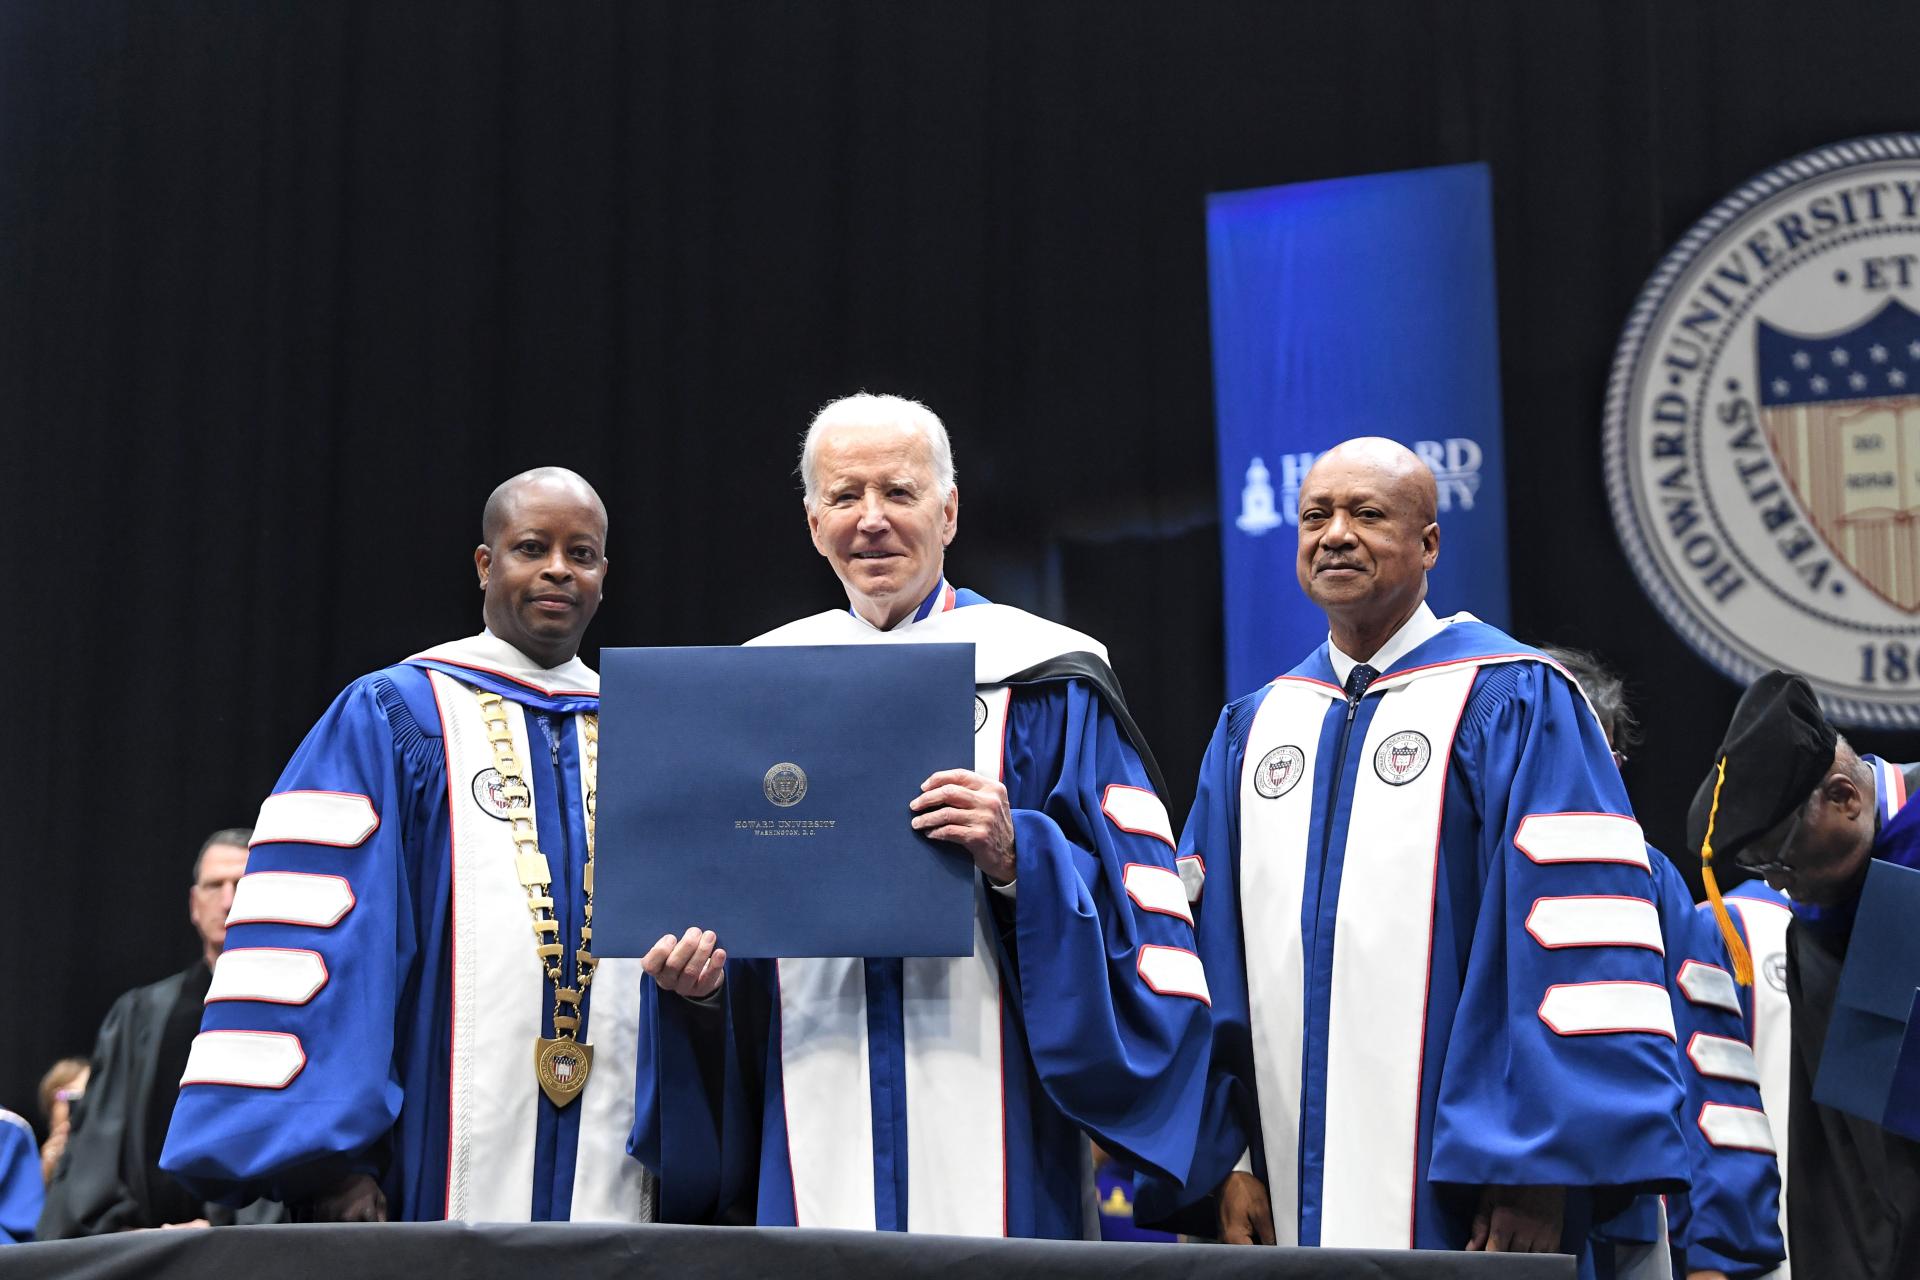 Joe Biden receiving. honorary degree